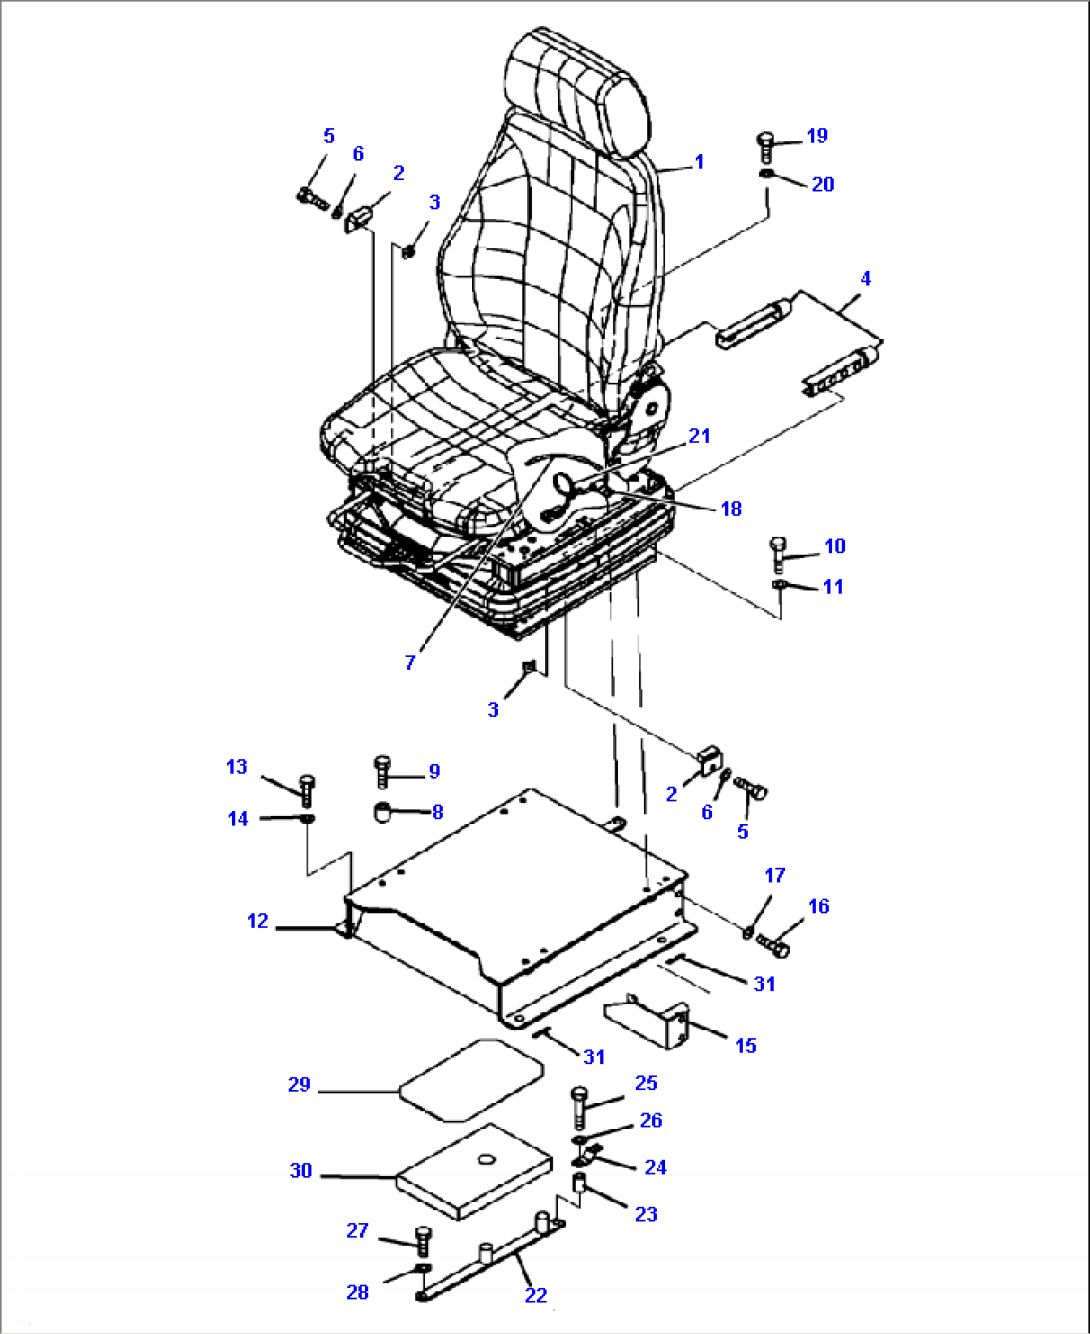 K0110-05A0 OPERATOR SEAT JOYSTICK STEERING (MOUNTING)